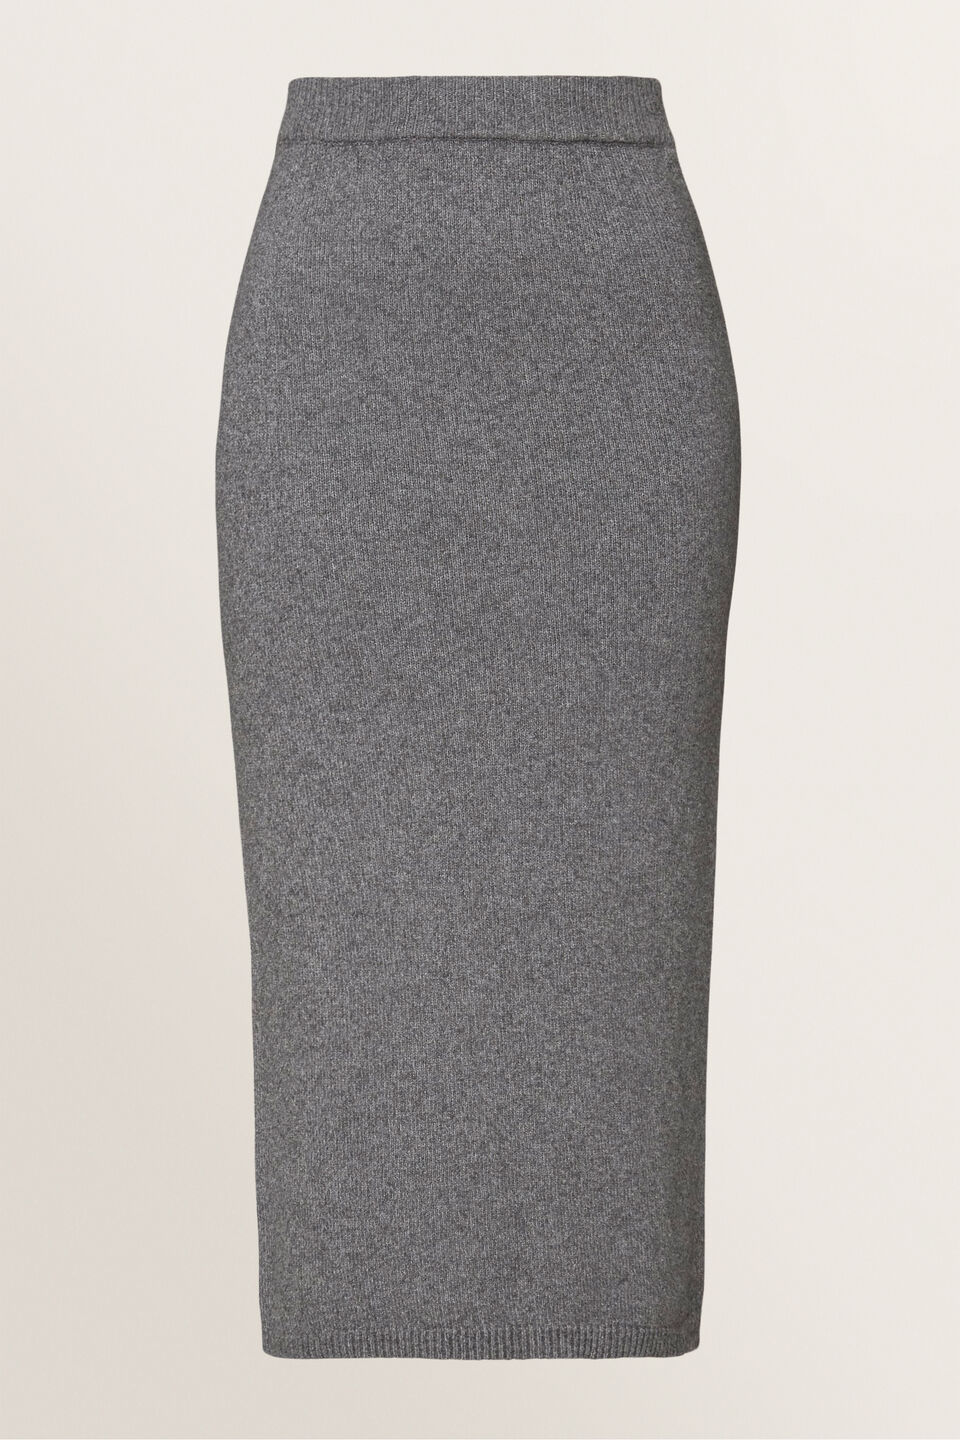 Textured Boucle Skirt  